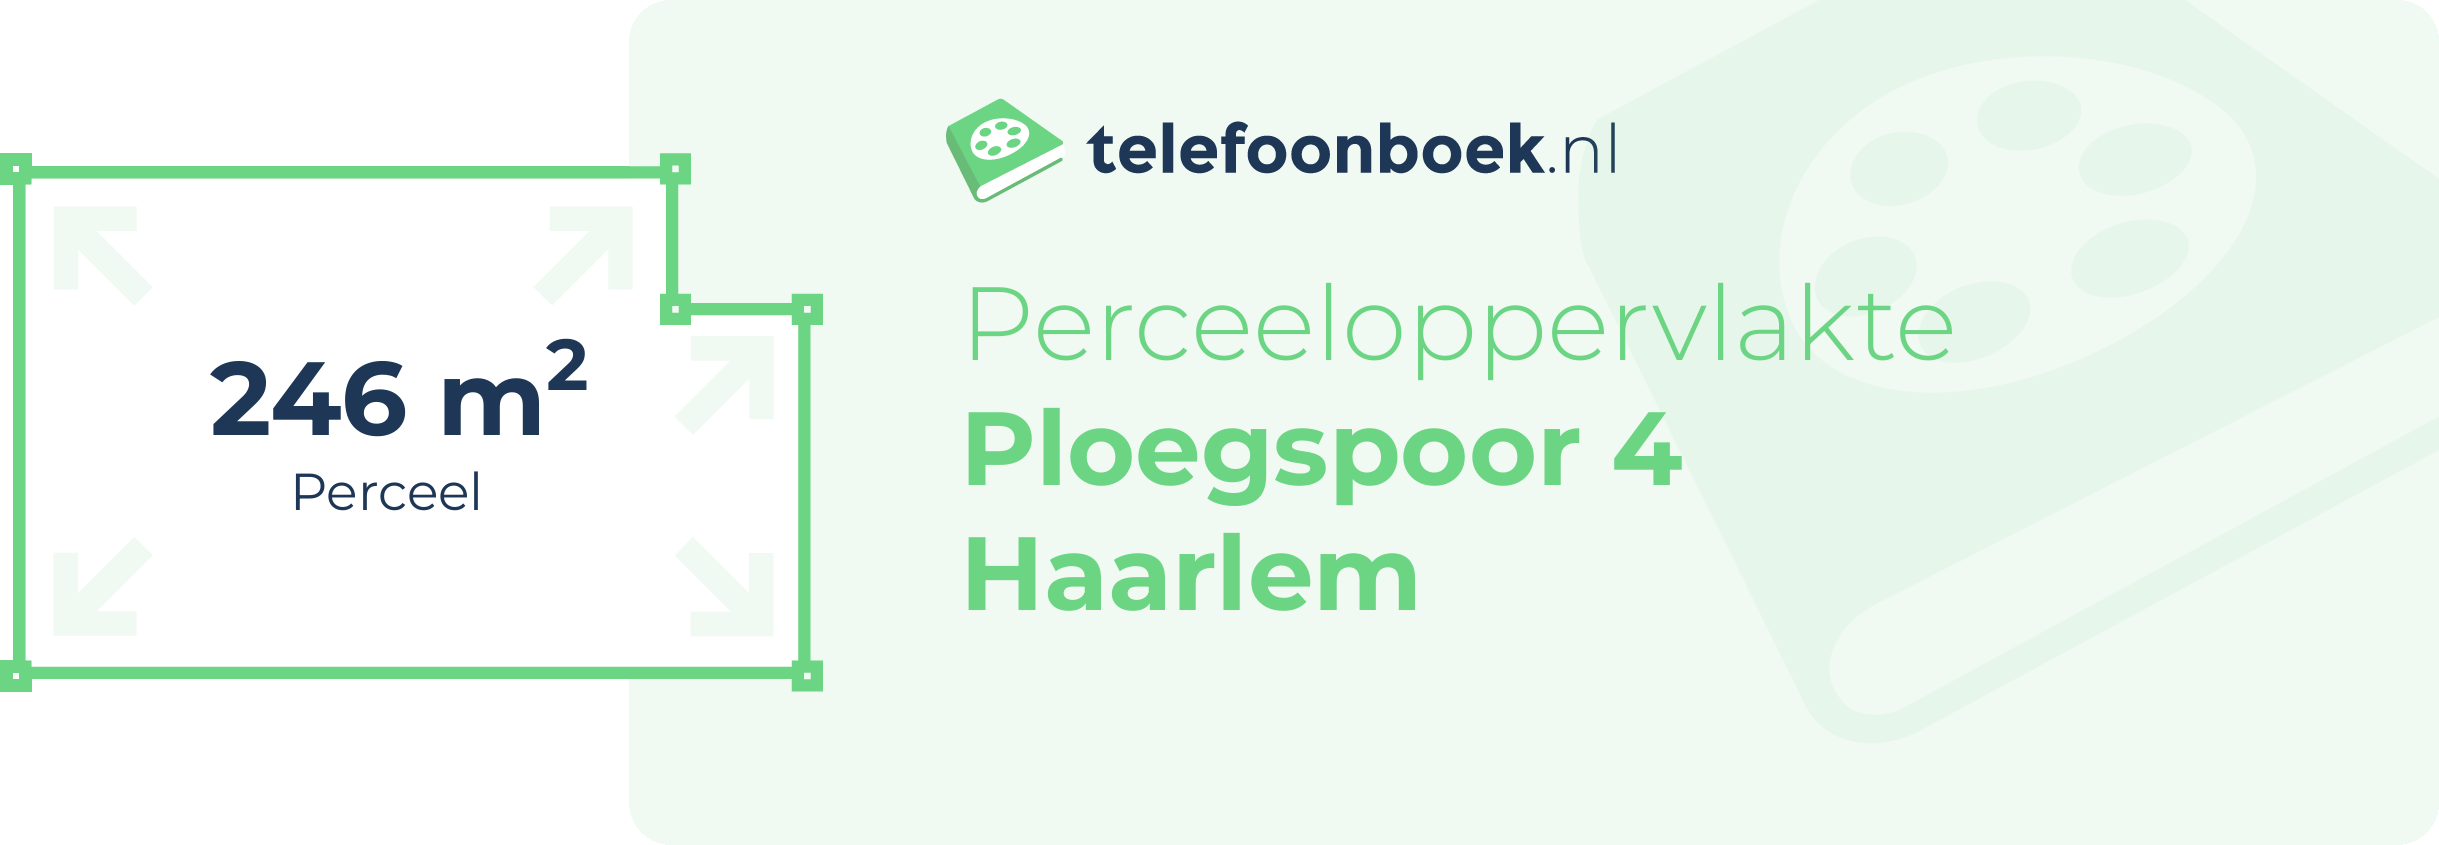 Perceeloppervlakte Ploegspoor 4 Haarlem